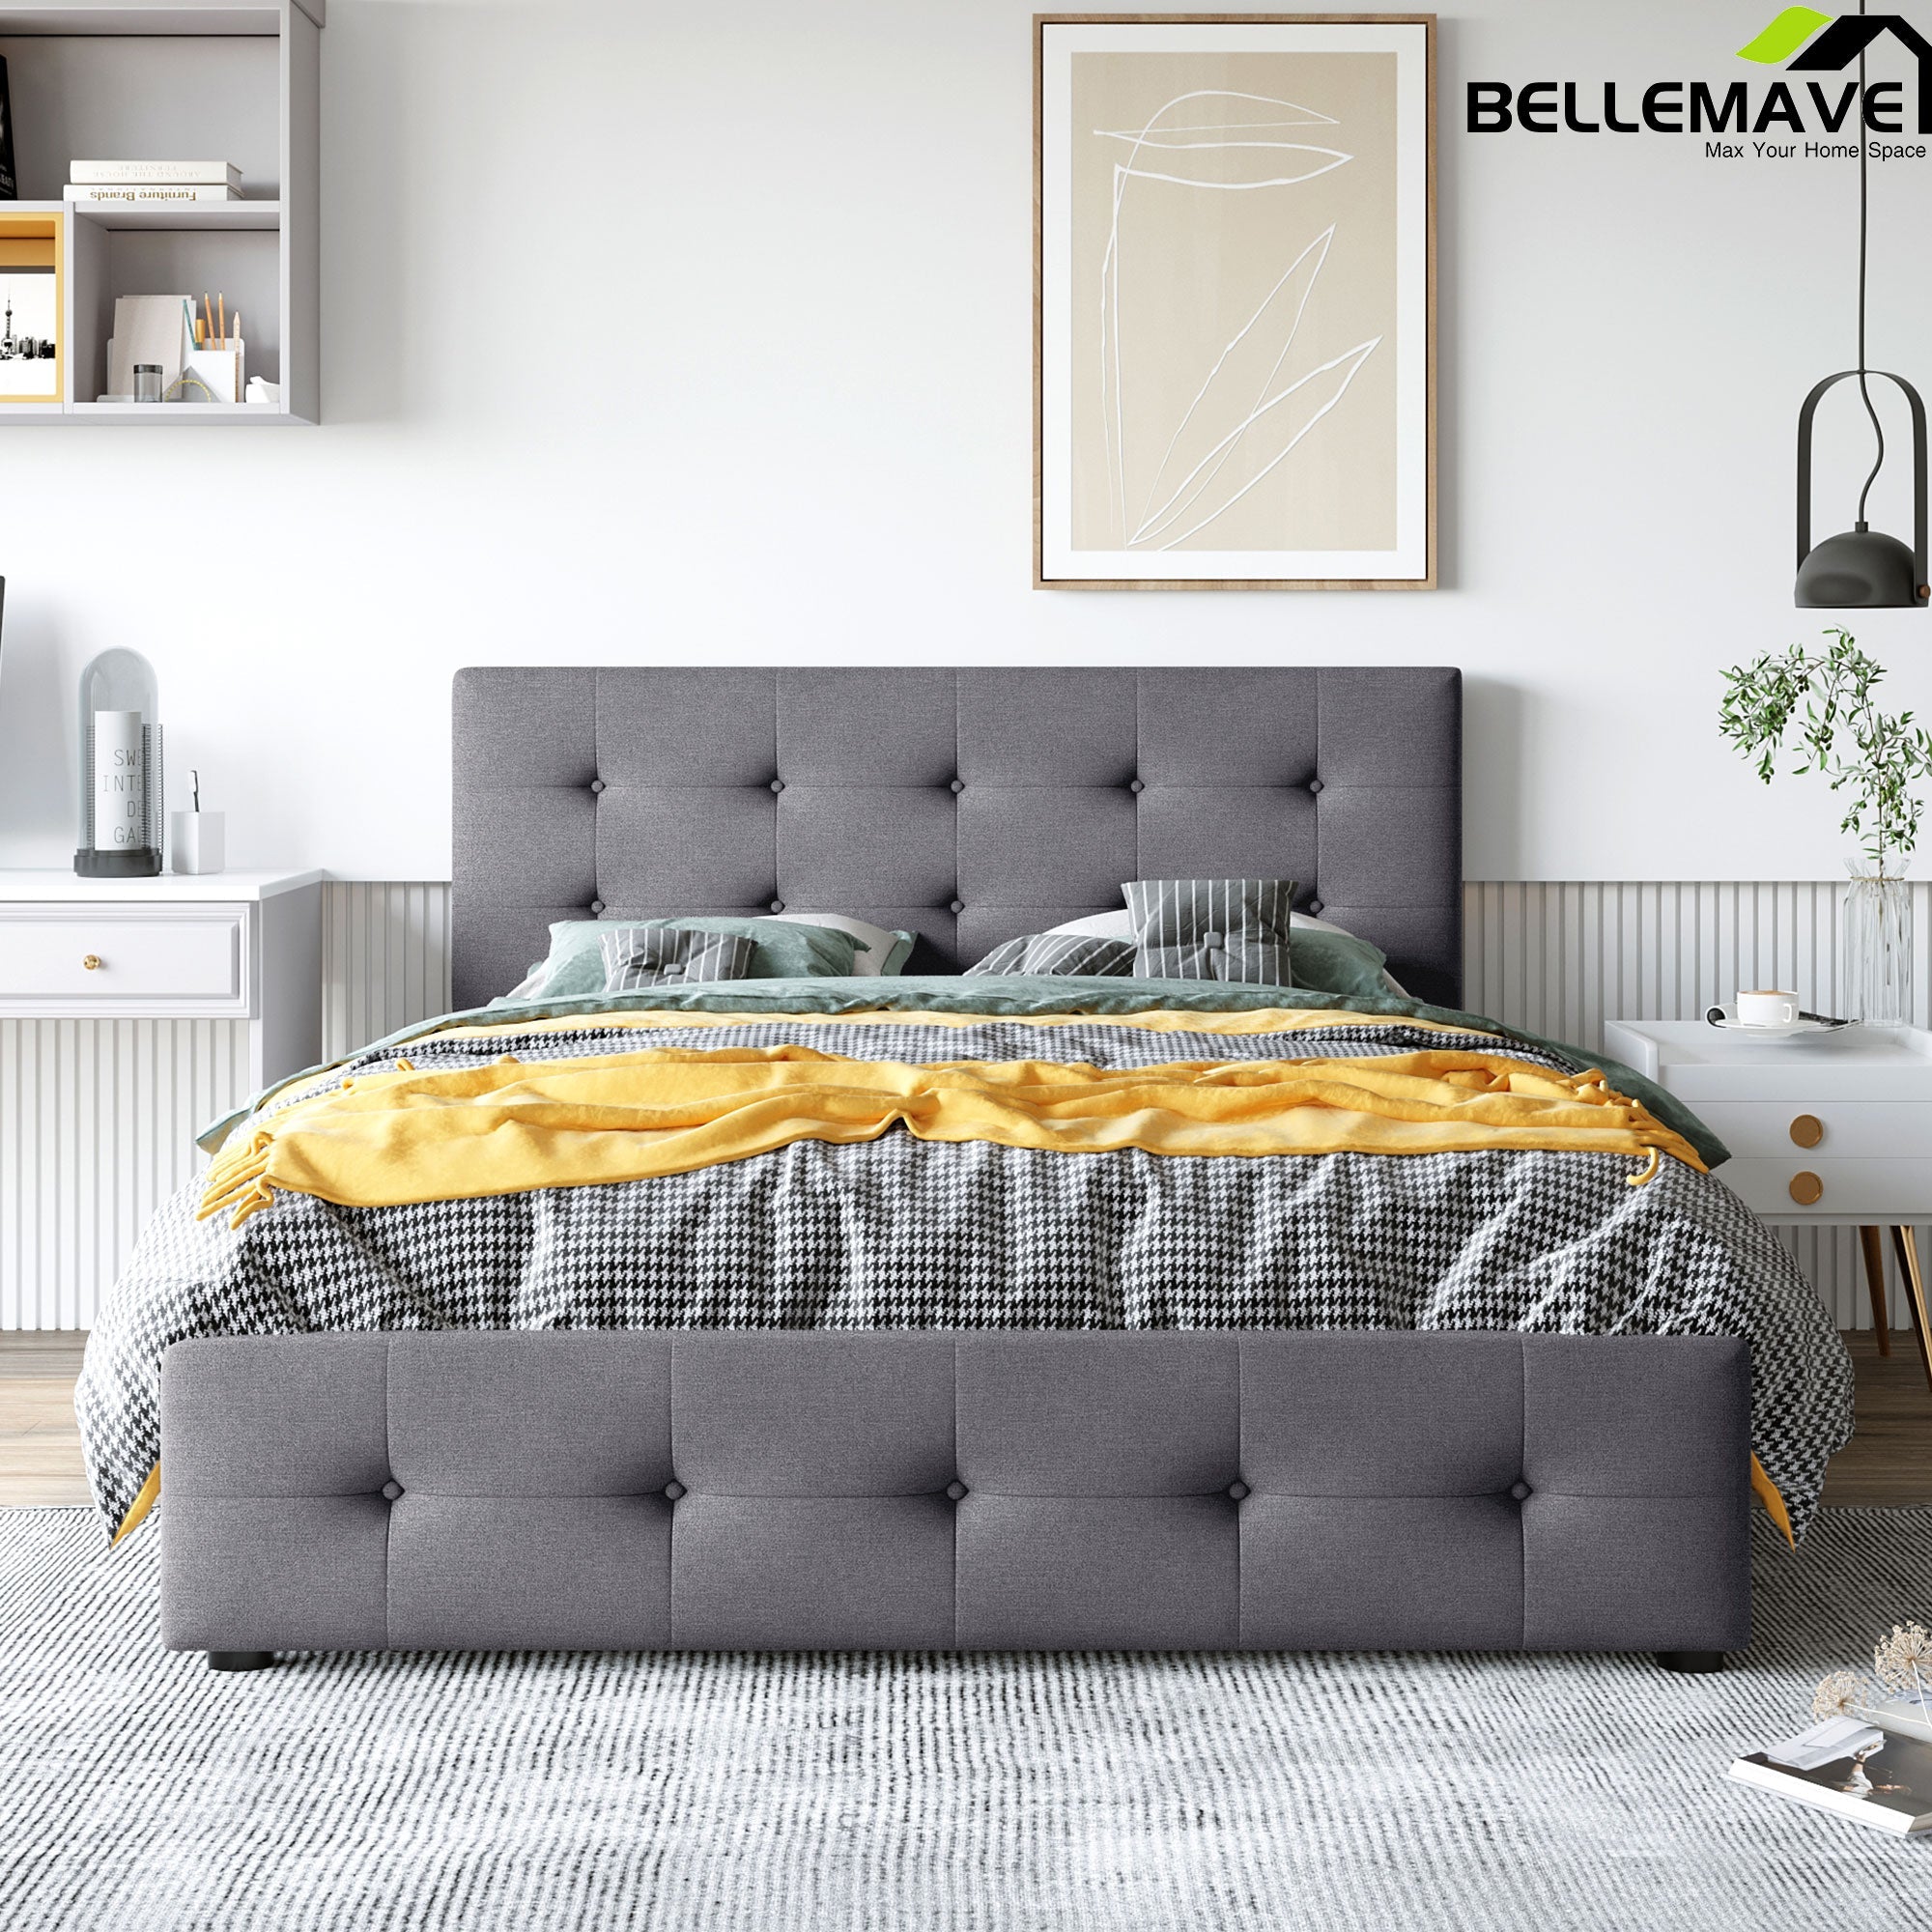 Bellemave Queen Size Linen Upholstered Platform Bed with 4 Drawers - Bellemave